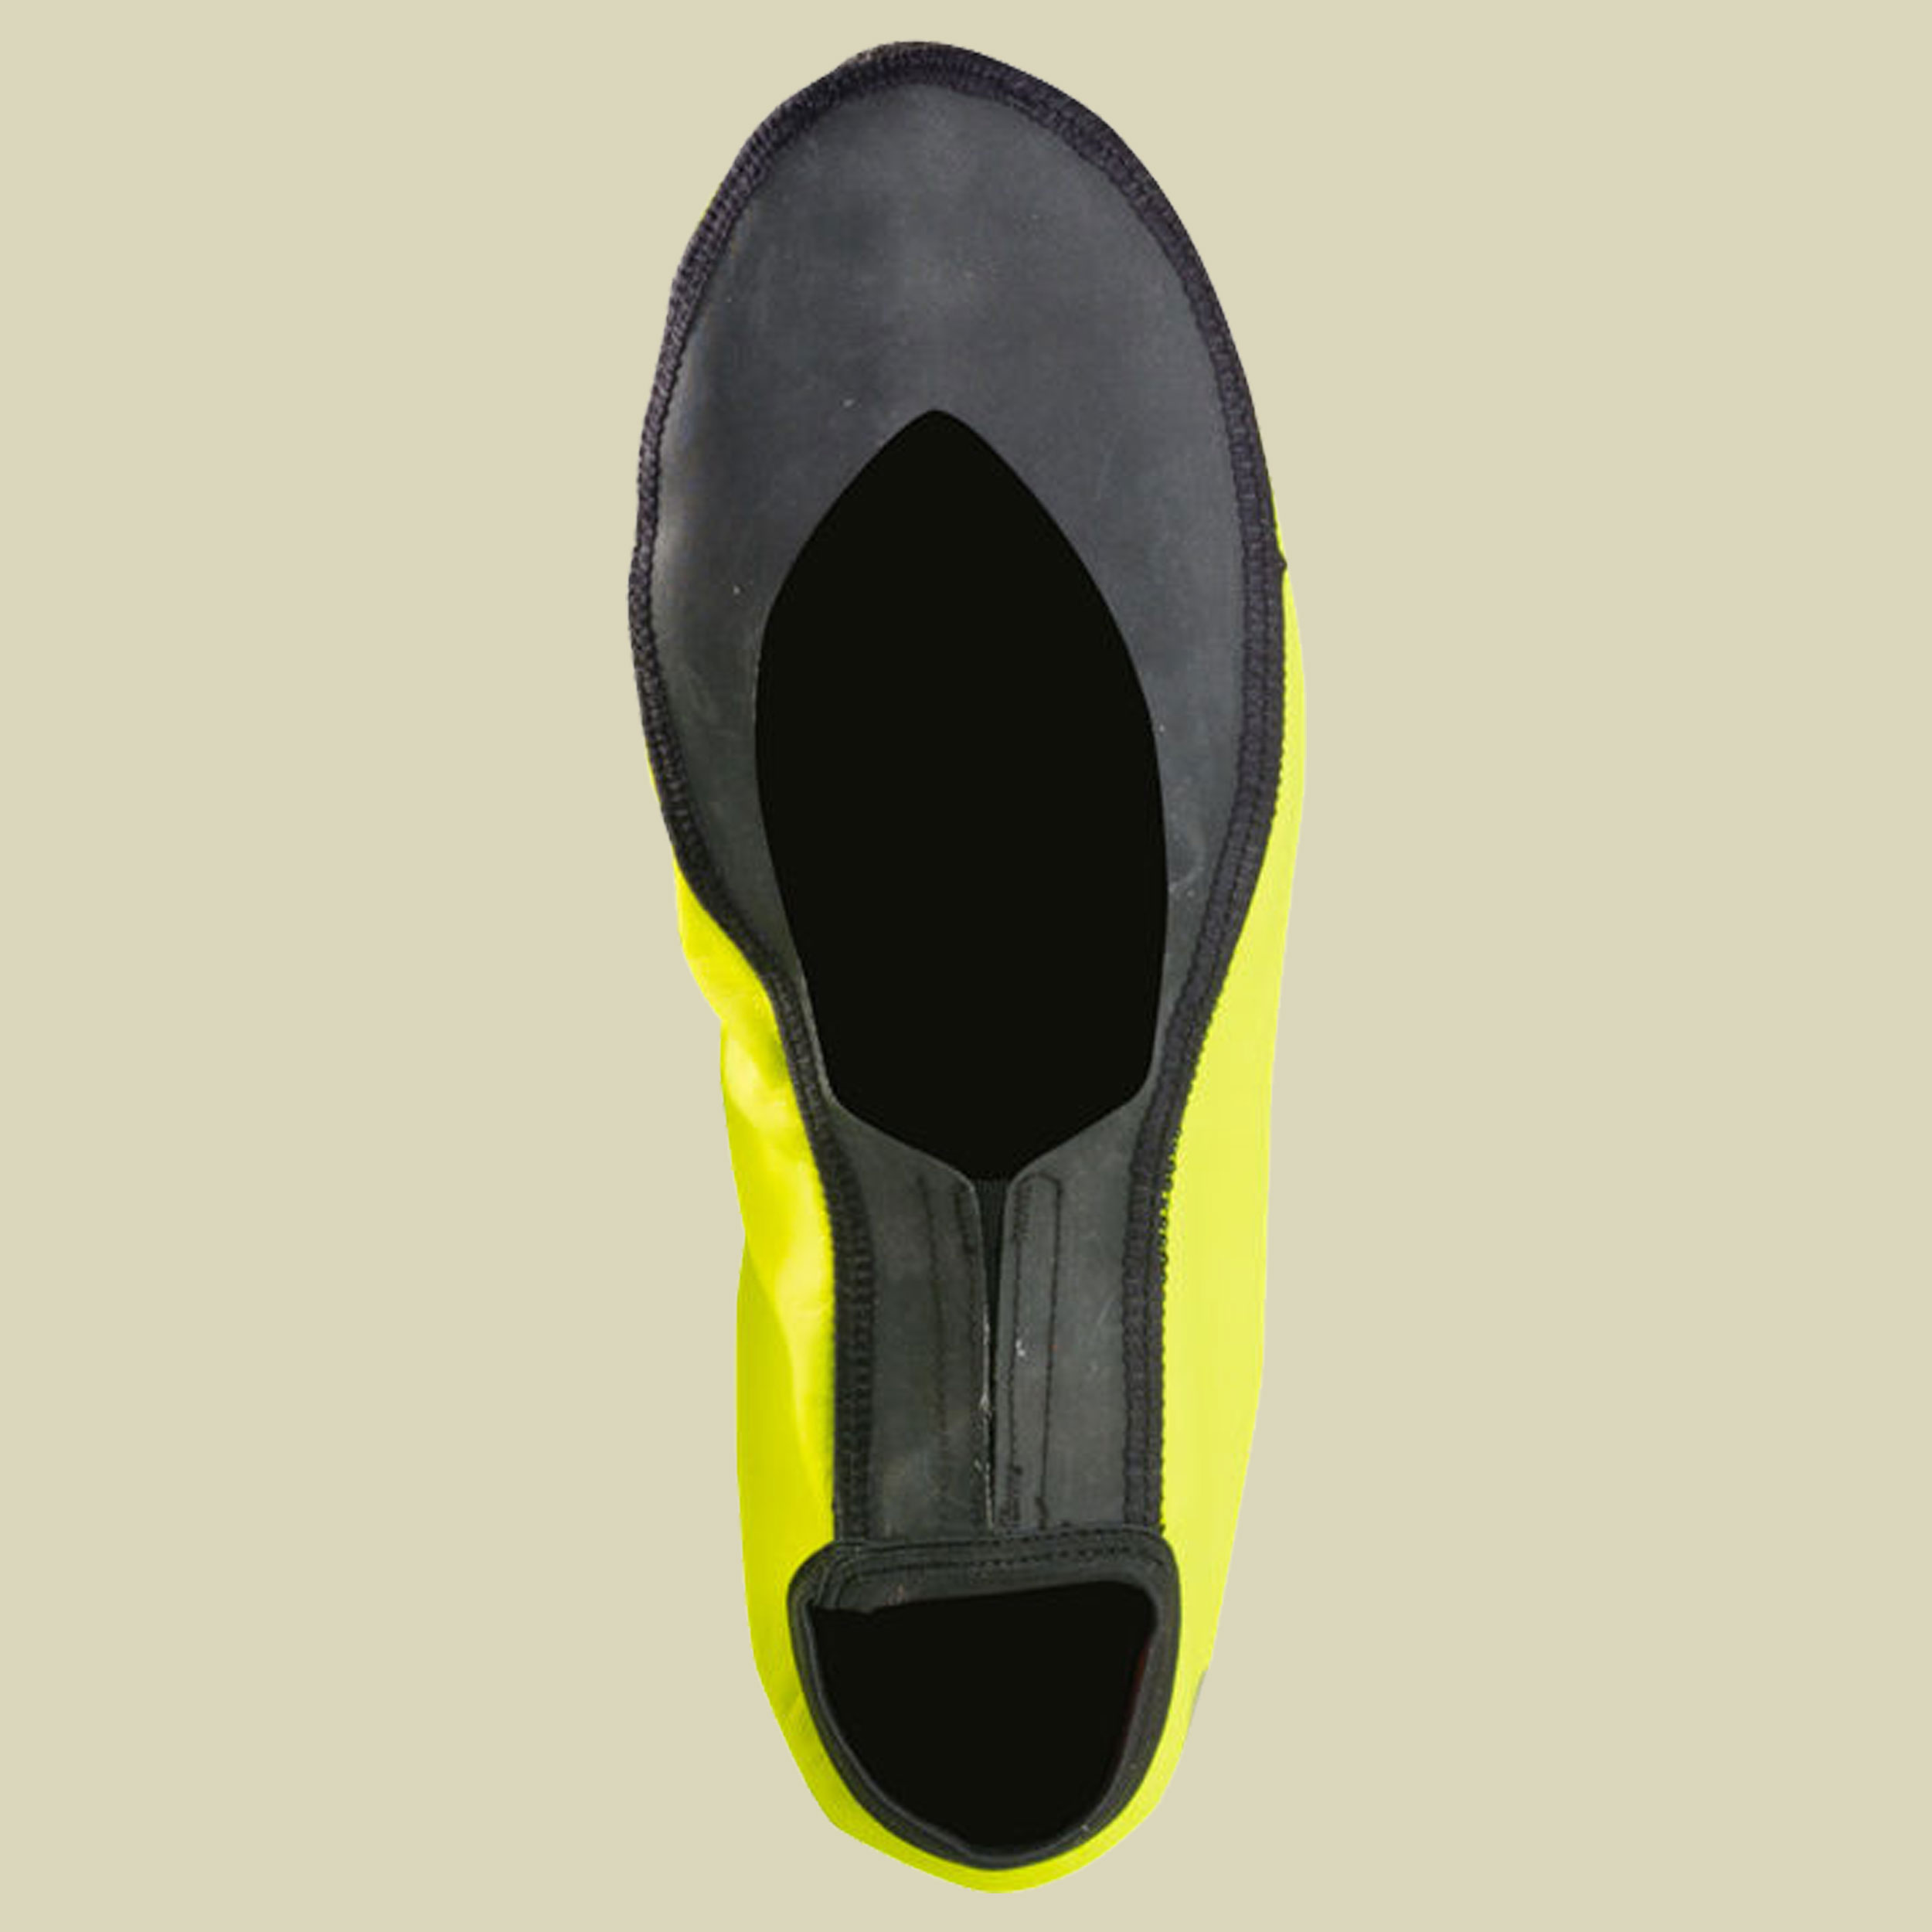 RXL Stormshell Road Shoe Cover Größe S Farbe black